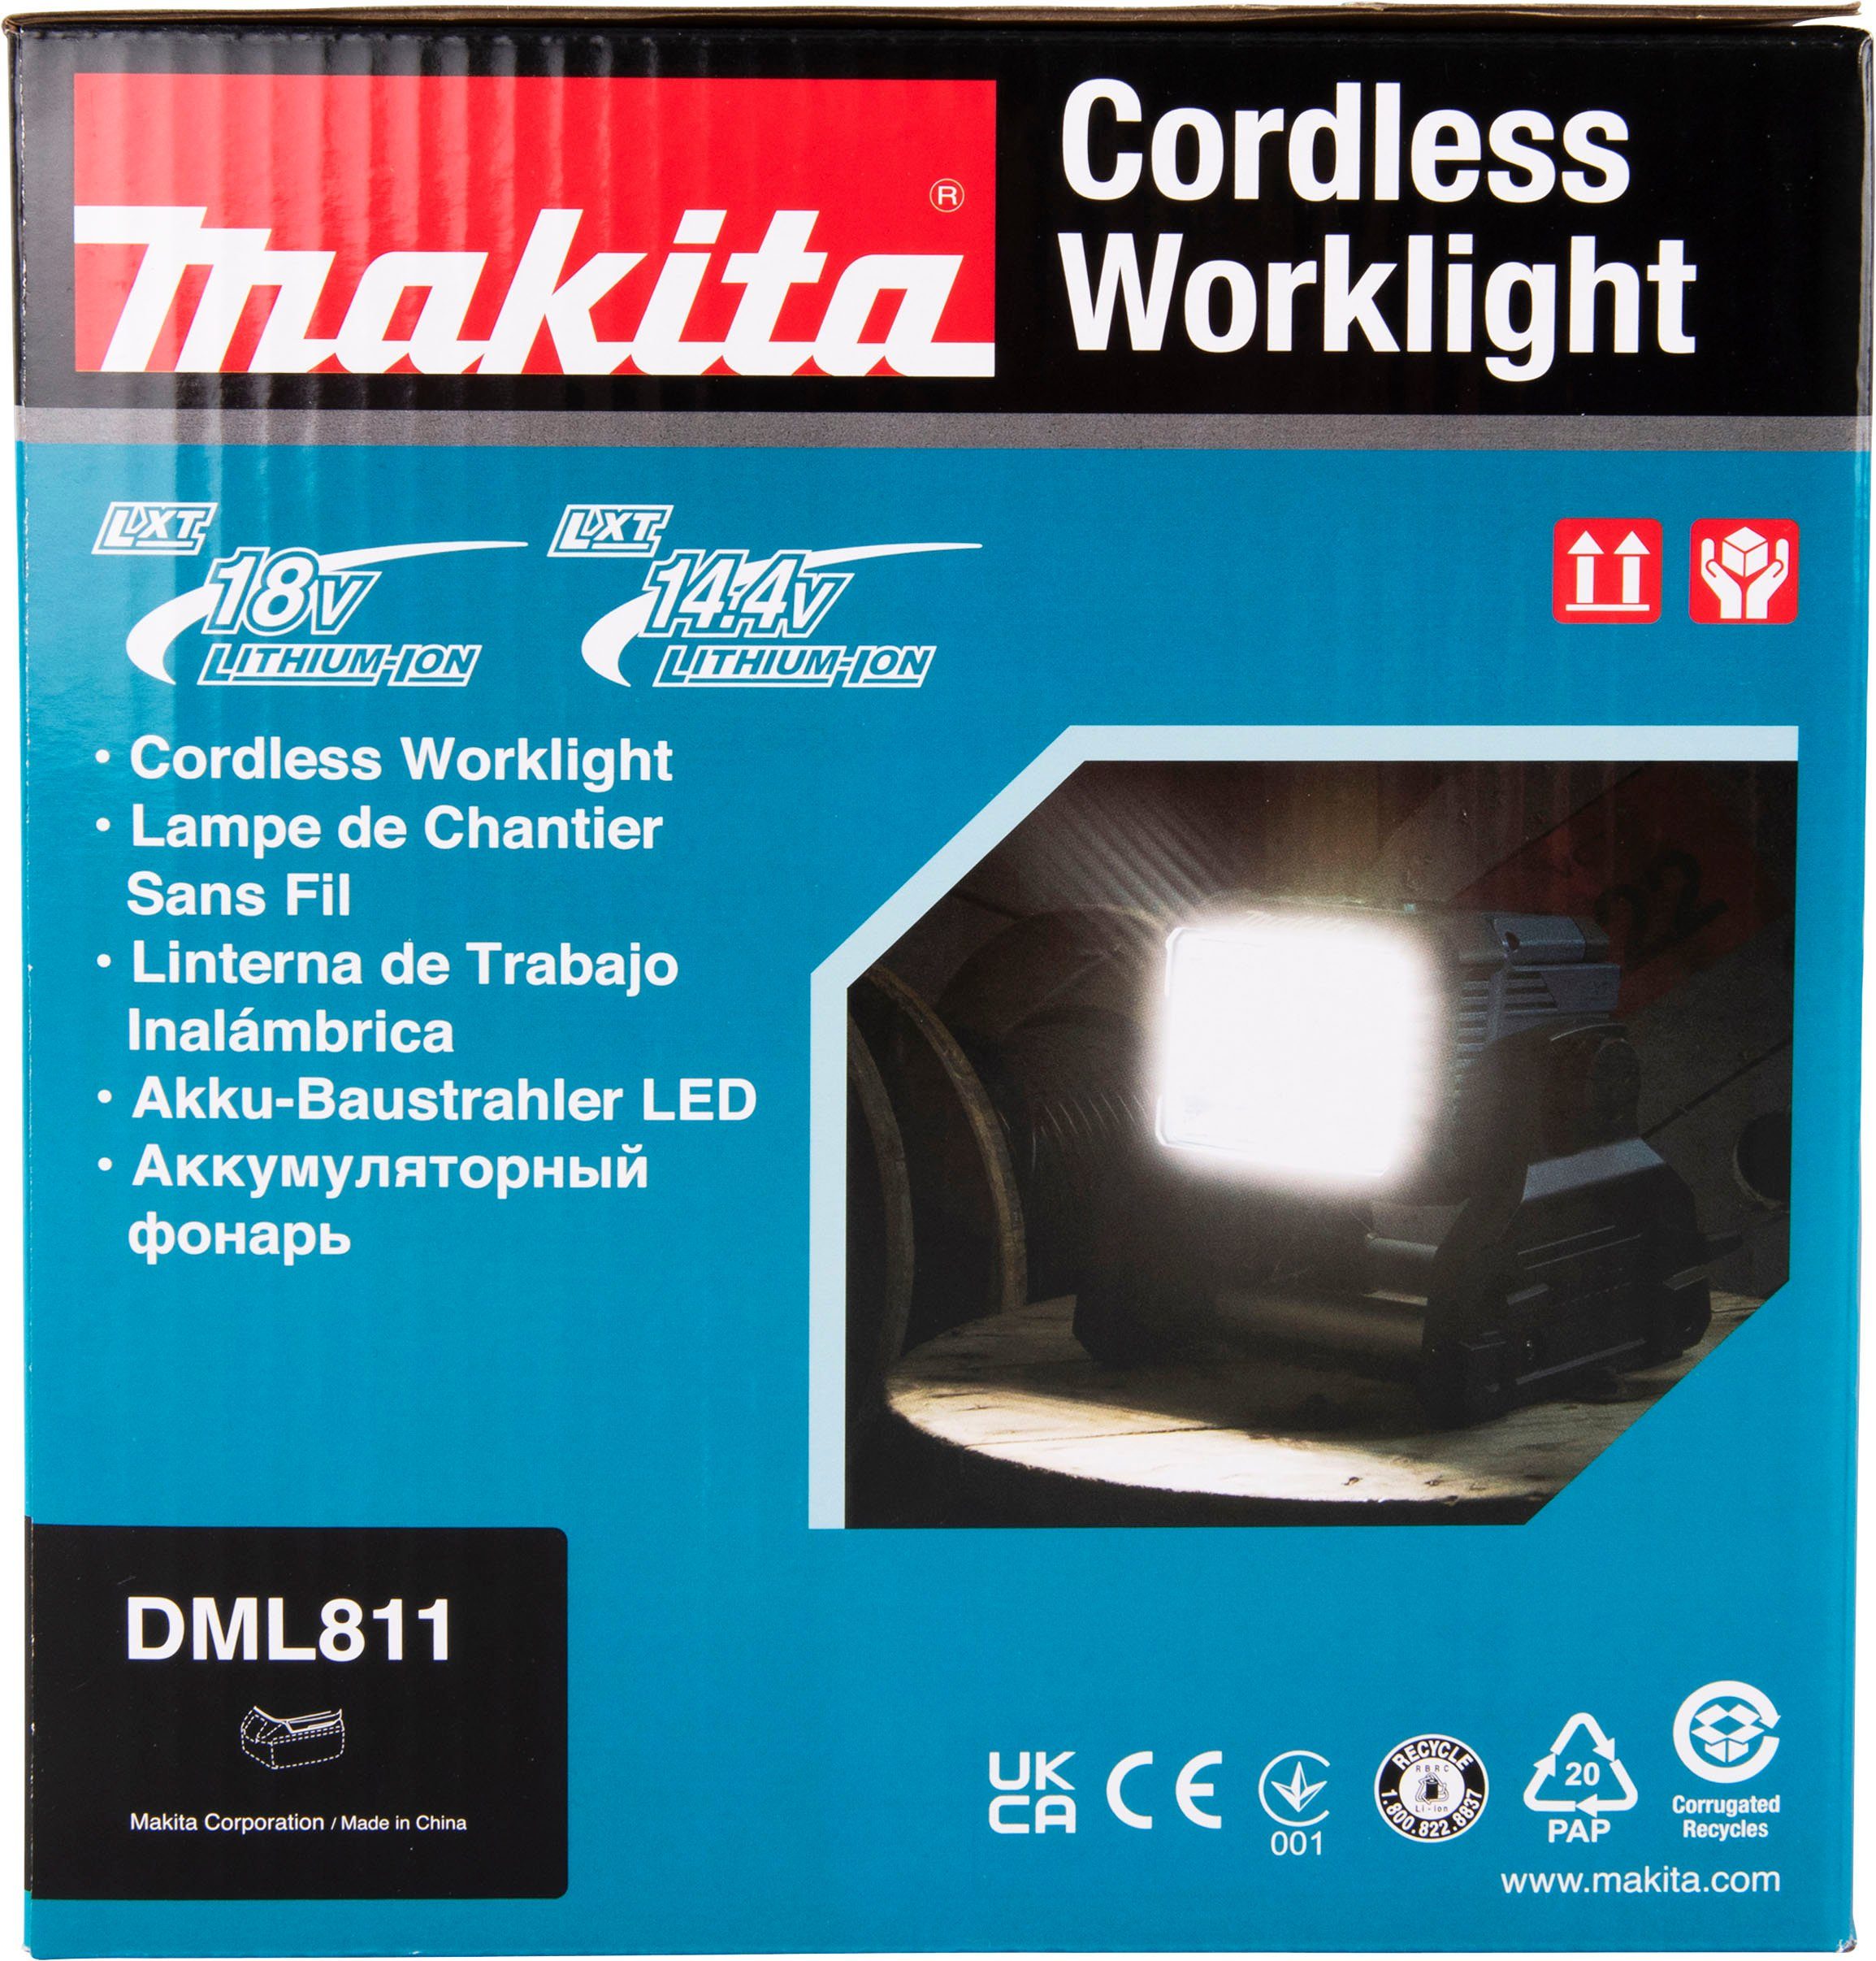 Makita LED fest DEADML811, Tageslichtweiß, 1800 750/1500/3000 lm Arbeitsleuchte lx, LED integriert